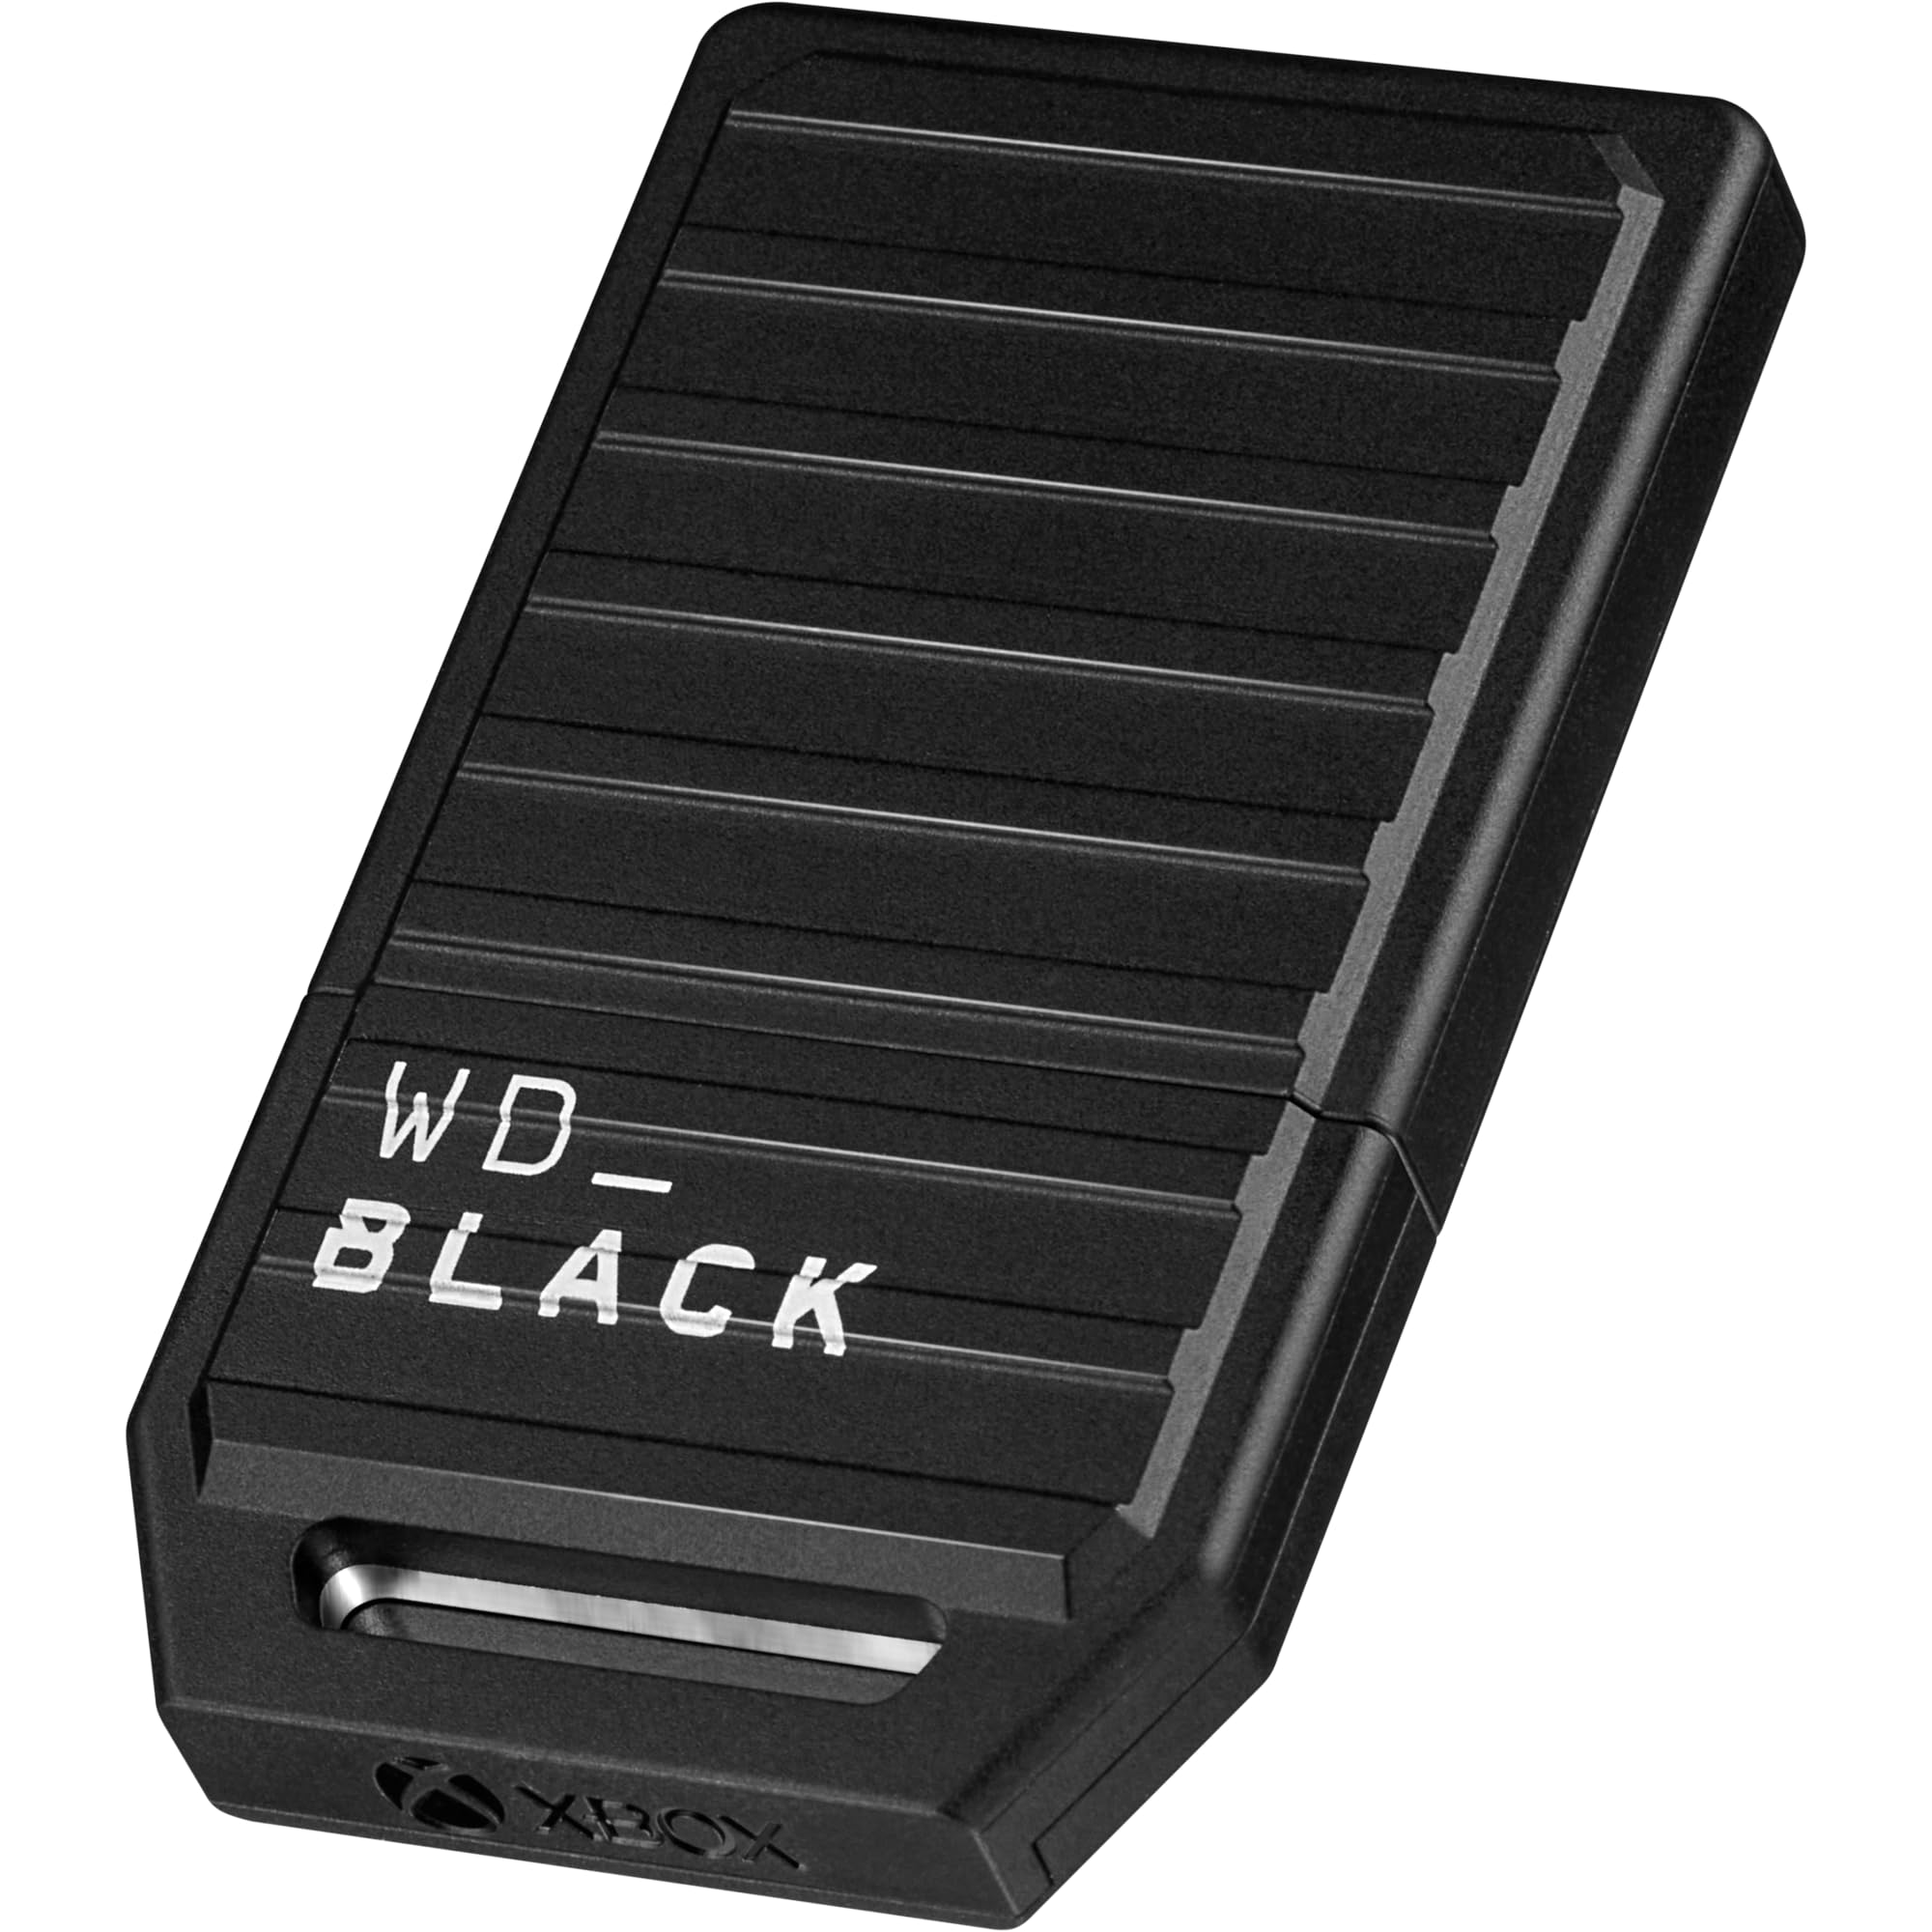 WD BLACK C50 EXPANSION CARD FOR